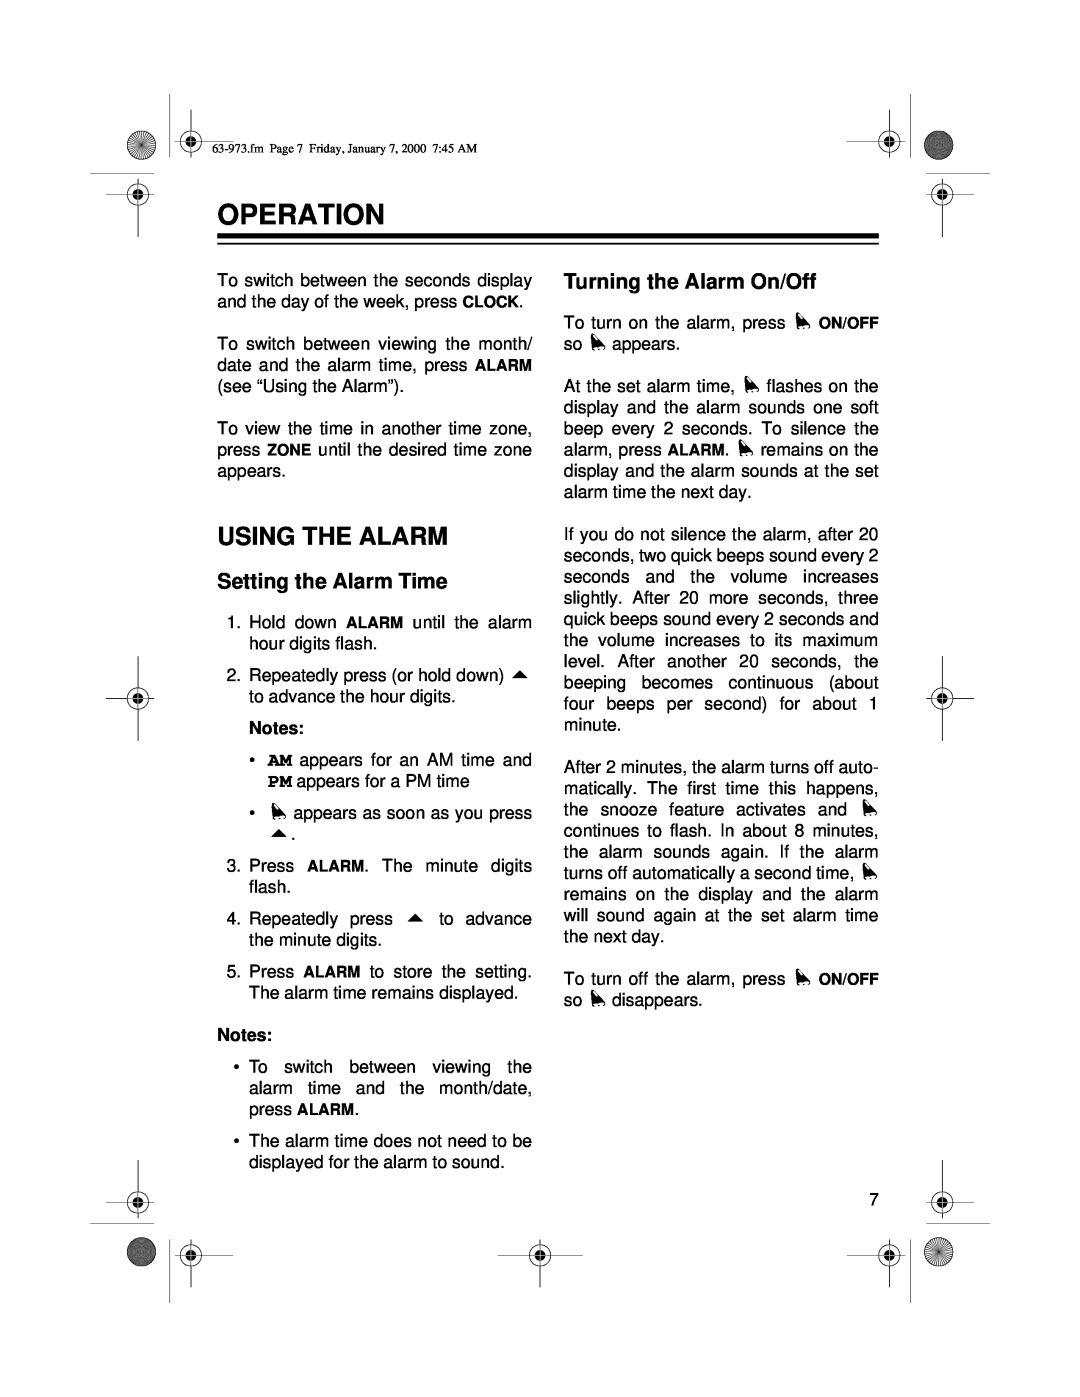 Radio Shack 63-973 owner manual Operation, Using The Alarm, Setting the Alarm Time, Turning the Alarm On/Off 